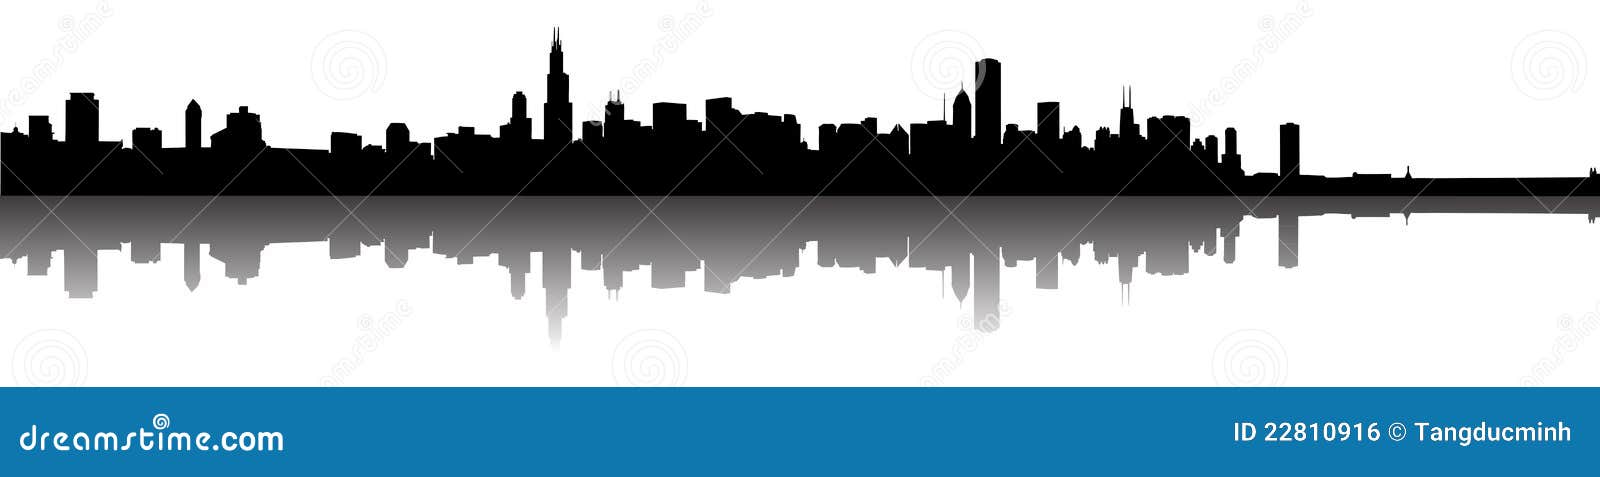 chicago skyline silhouette